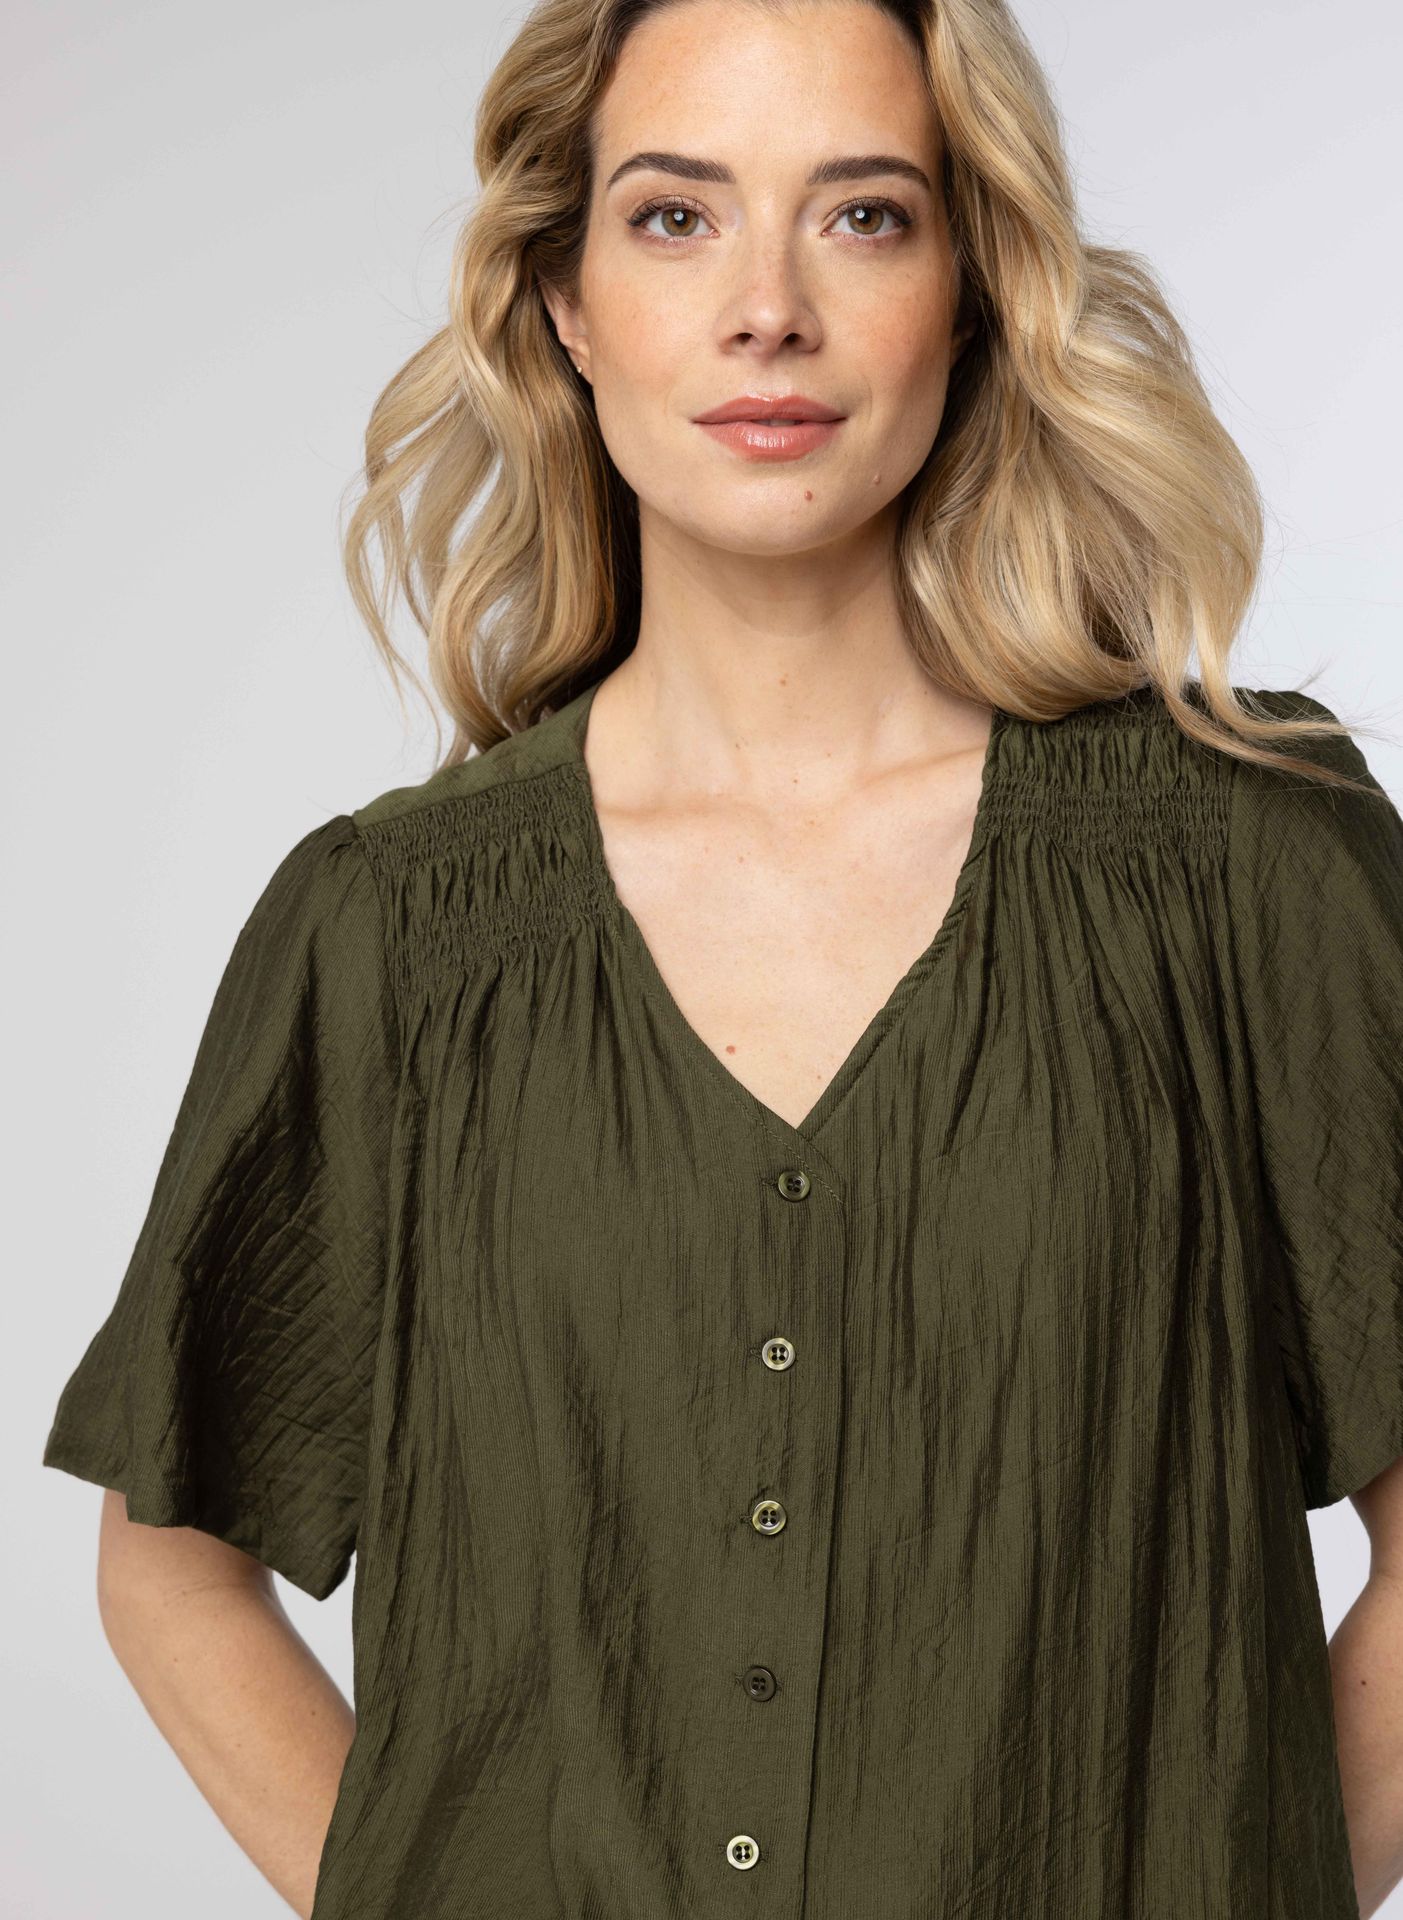 Norah Legergroene blouse dark olive 213546-598